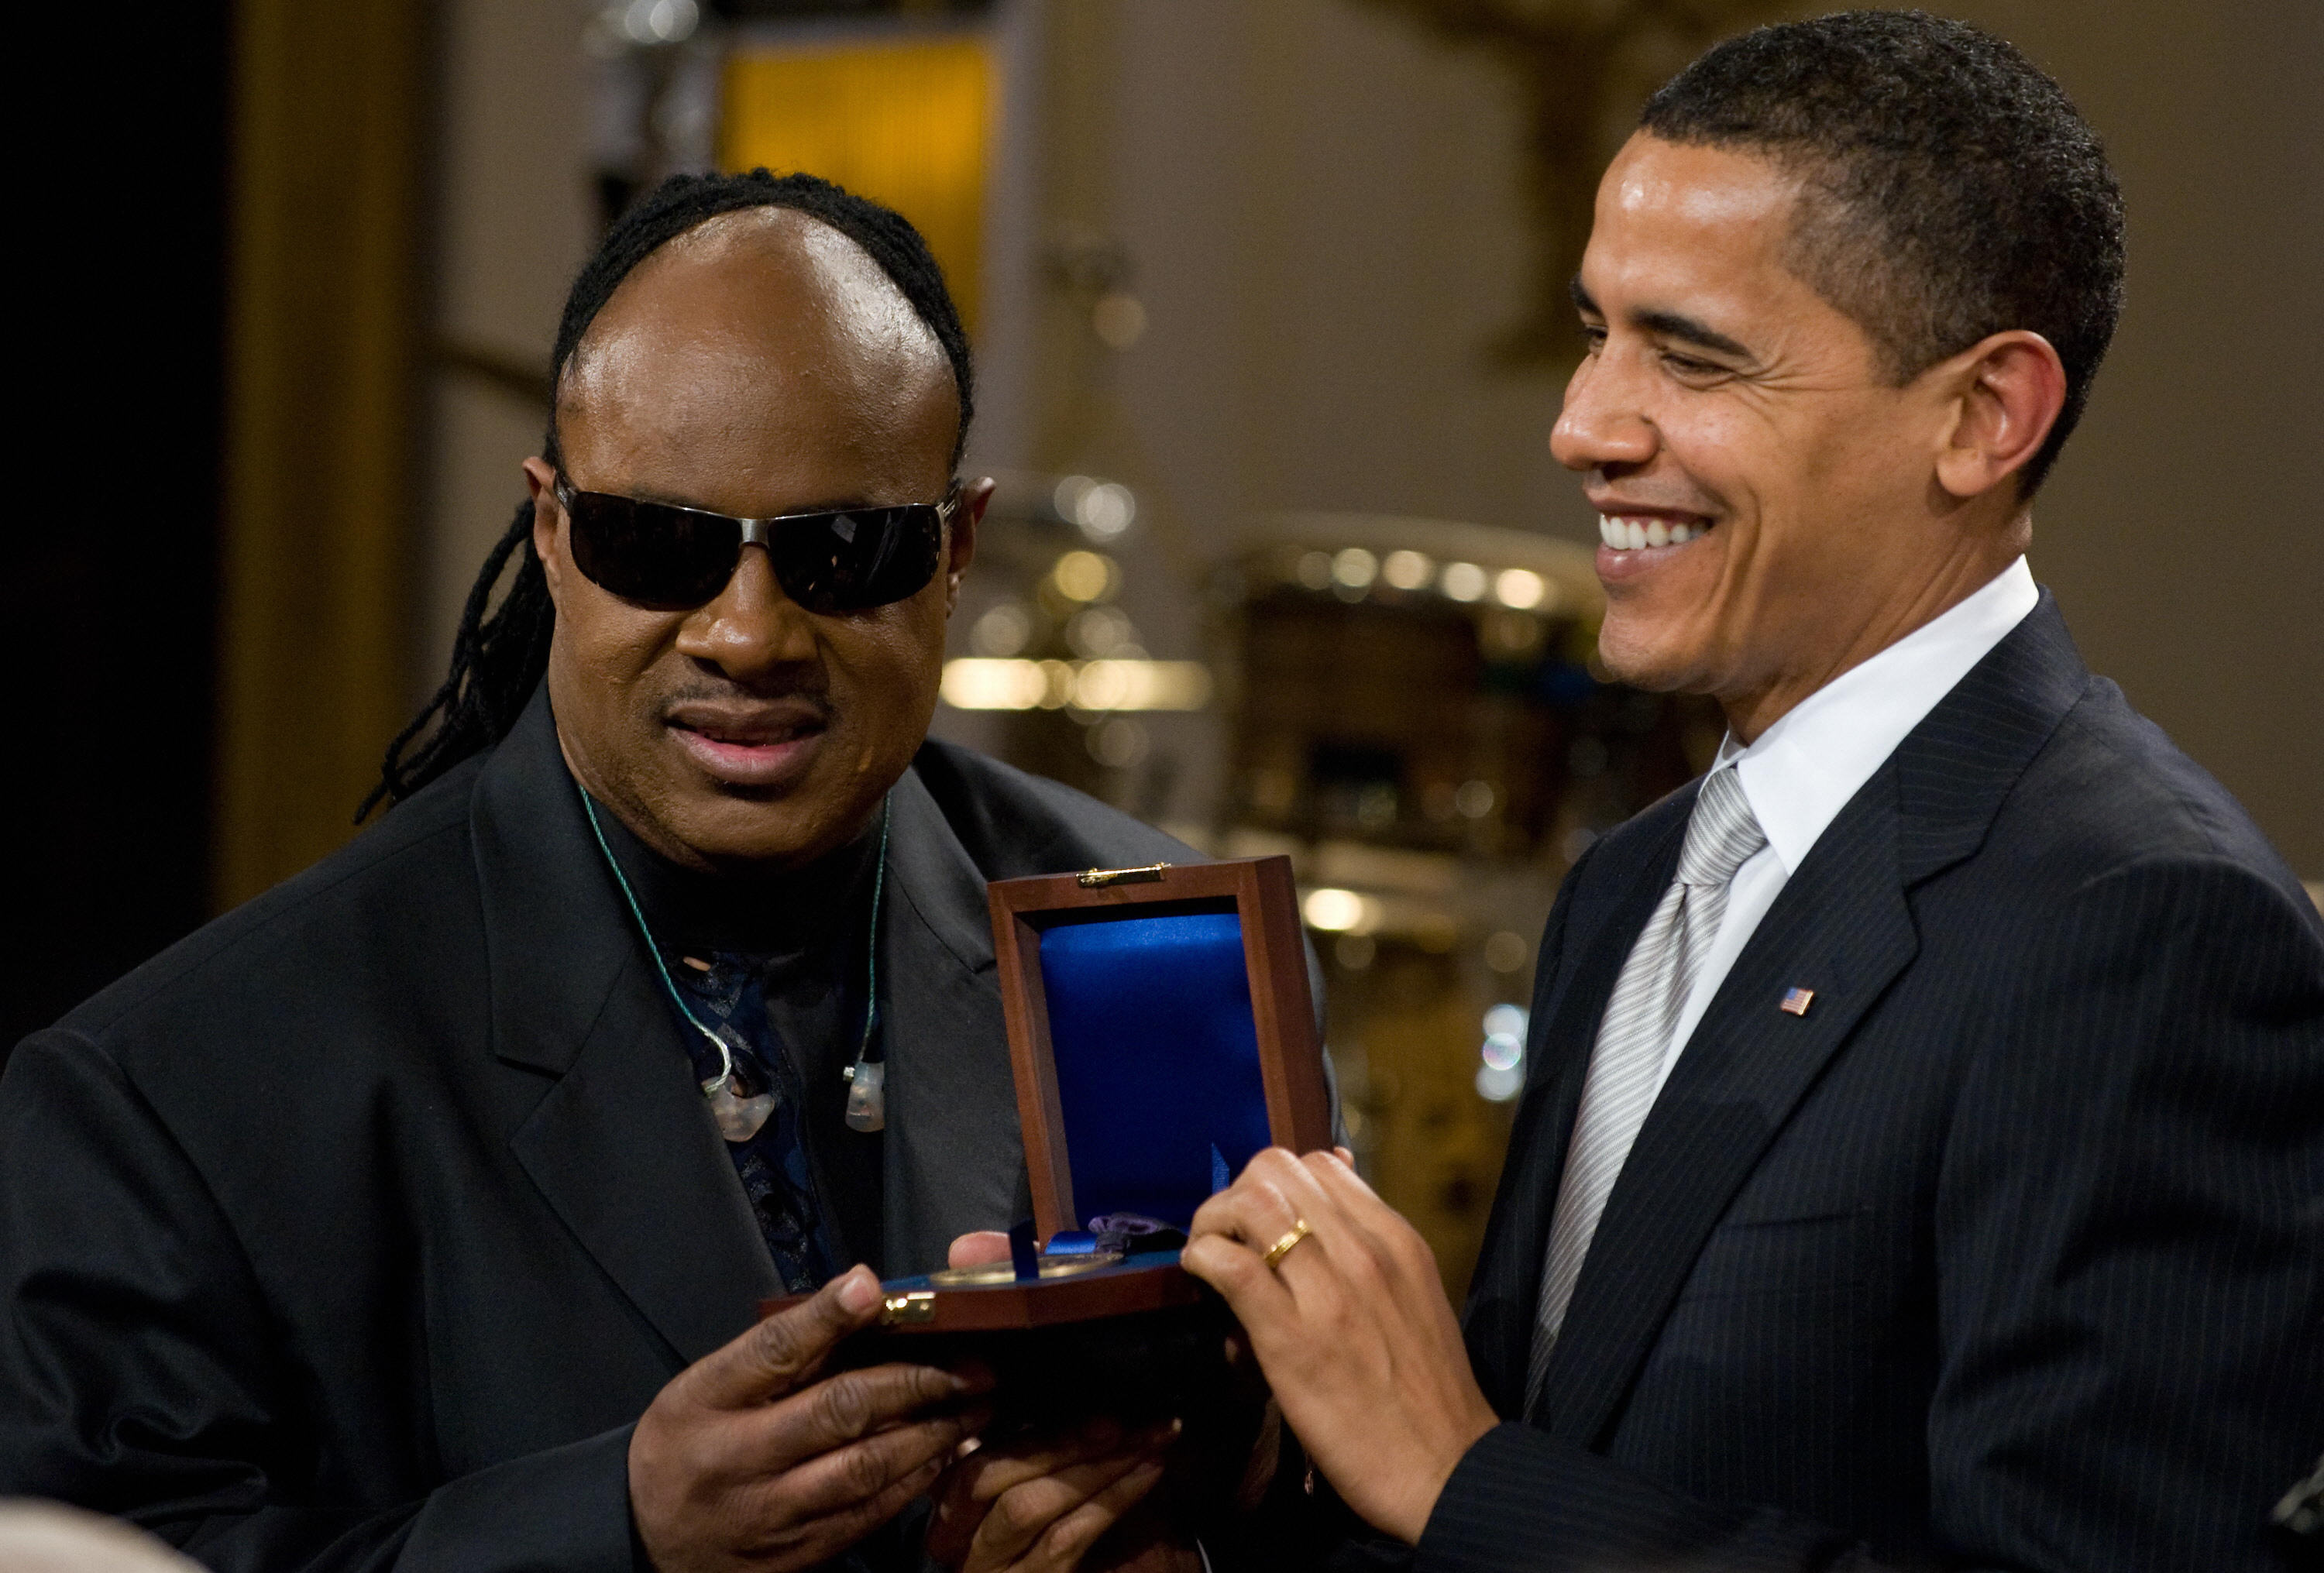 US President Barack Obama presents music